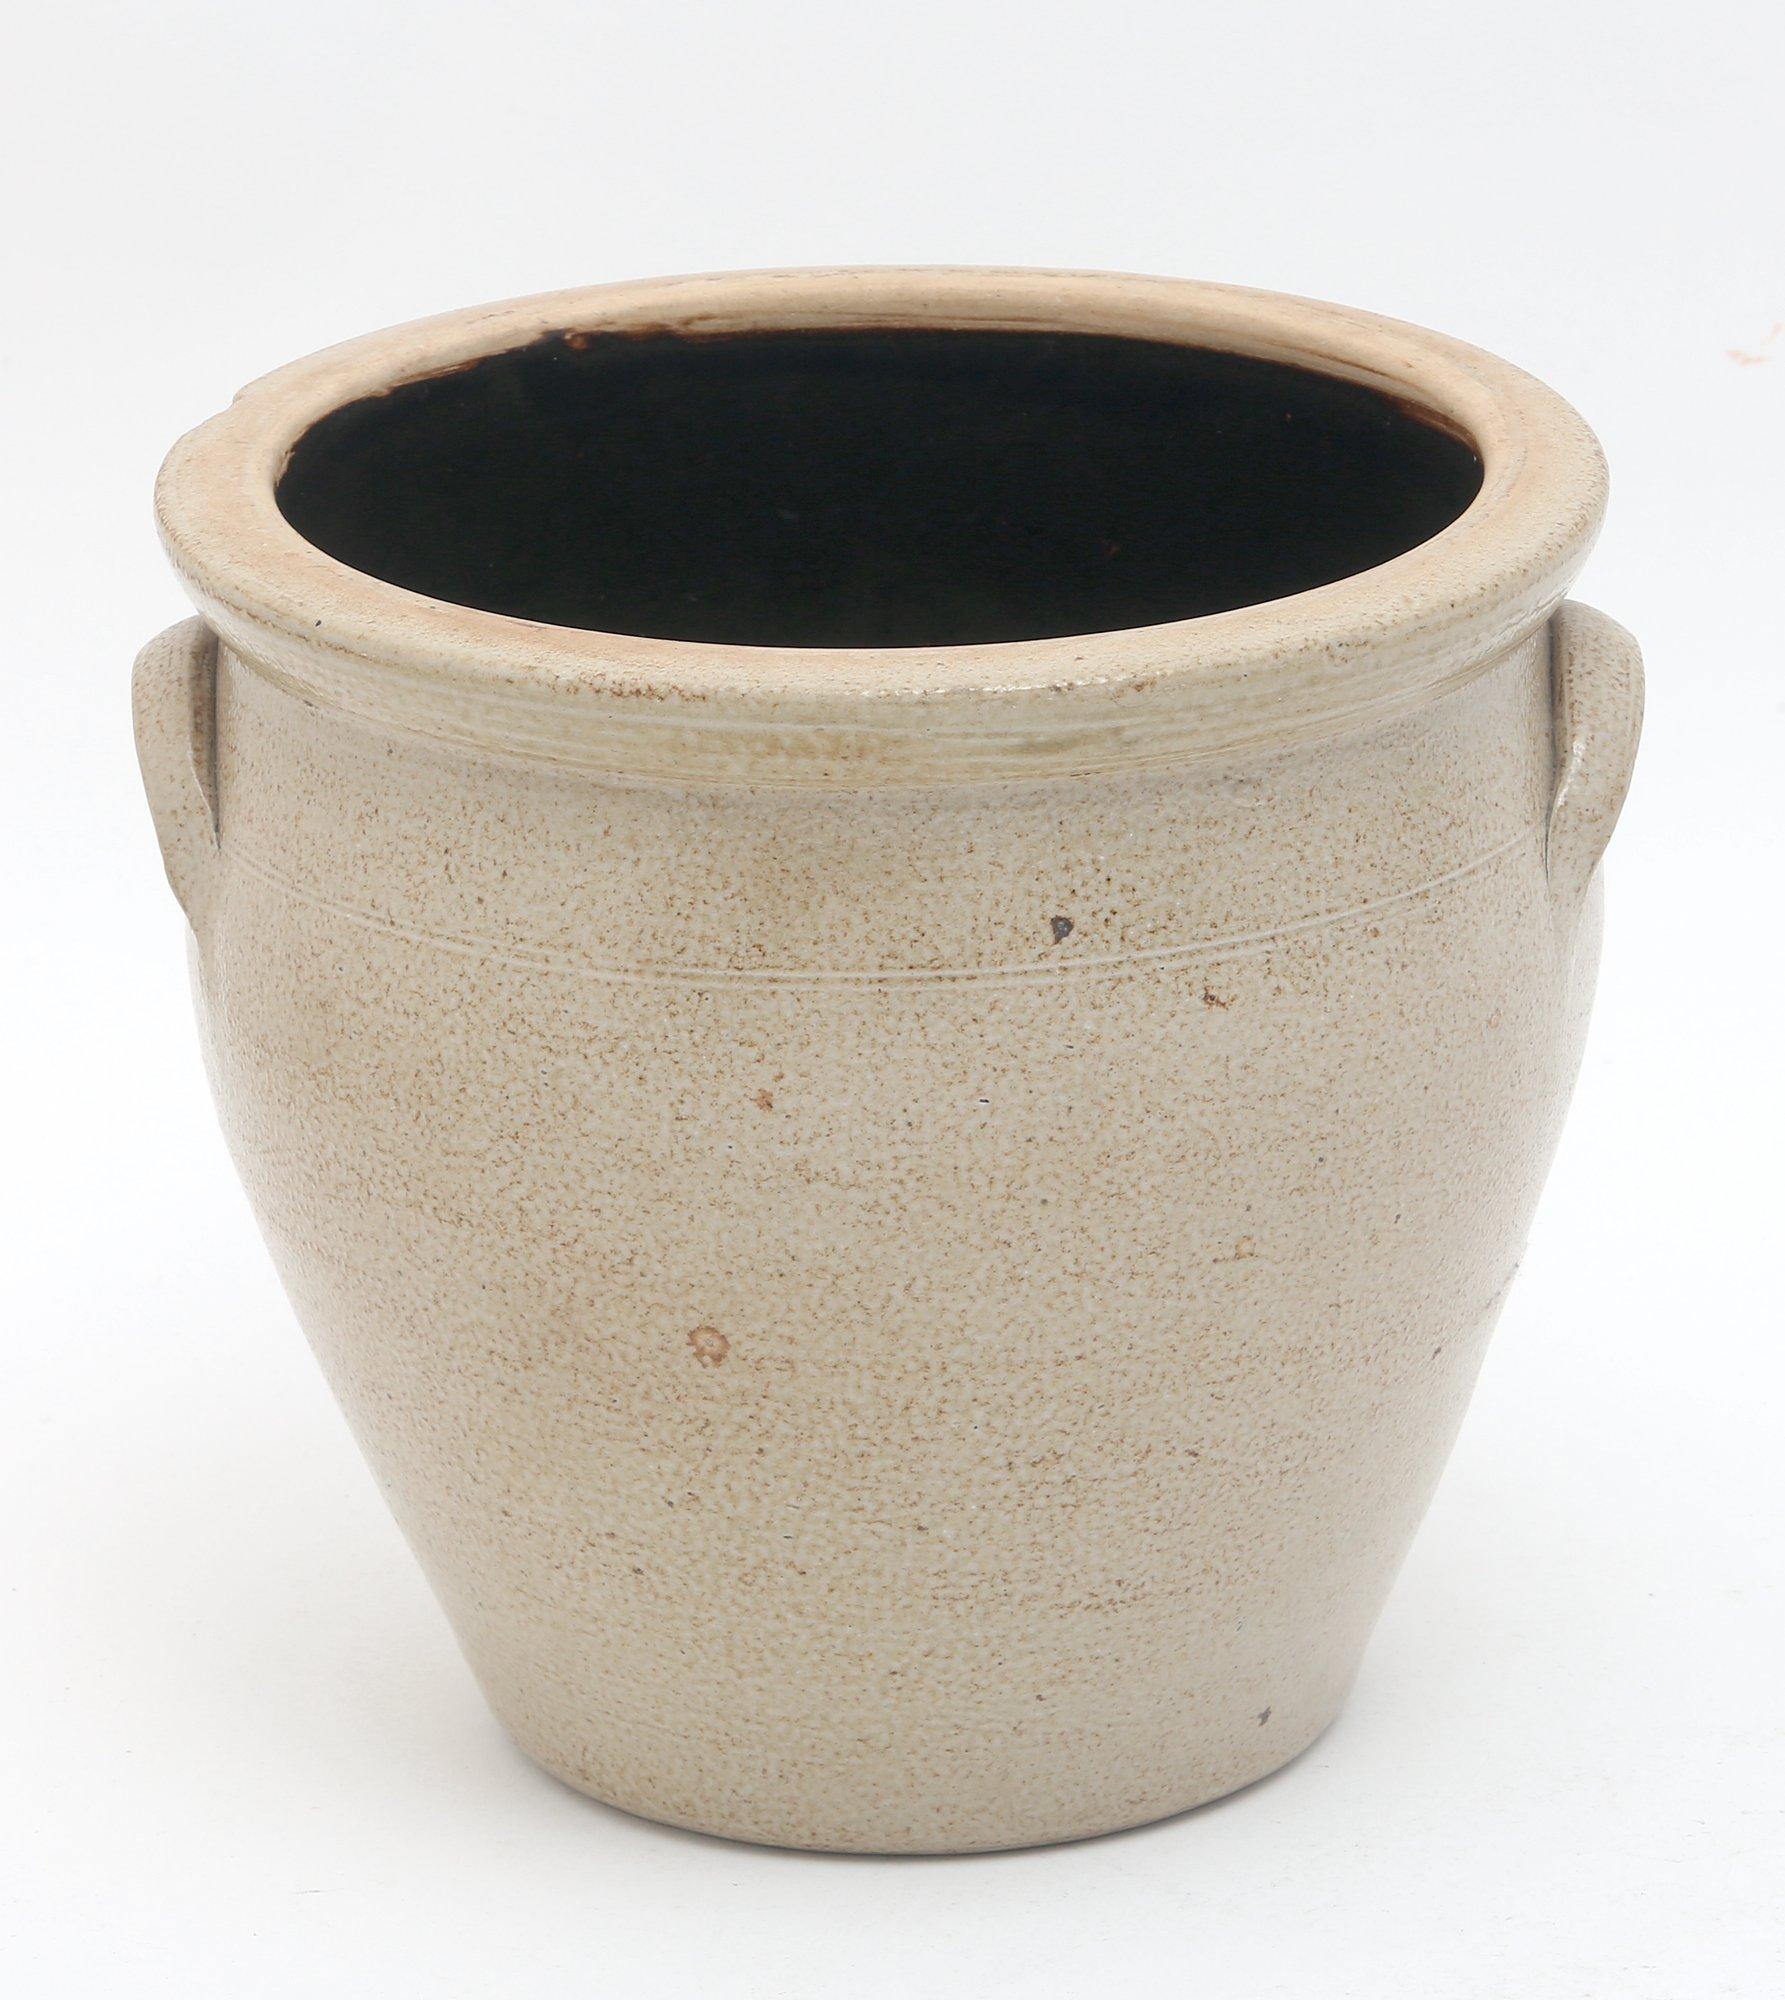 Clay Pottery Vase /evan R Jones